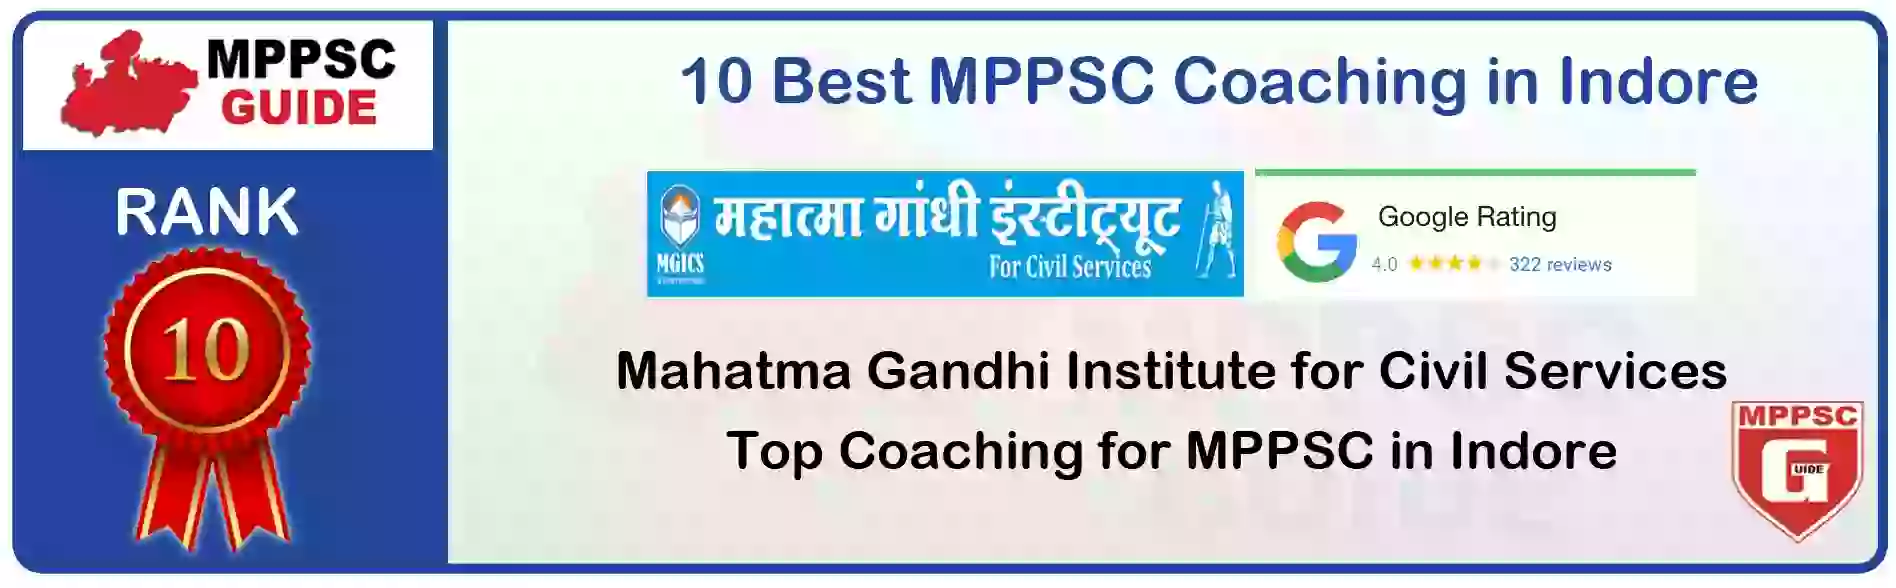 MPPSC Coaching in Barwan, MPPSC Coaching Institute In Barwan, Best MPPSC Coaching in Barwan, Top 10 MPPSC Coaching In Barwan, best mppsc coaching institute in barwan, MPPSC Coaching Classes In Barwan, MPPSC Online Coaching In Barwan, mppsc coaching in Barwan bhanwarkua